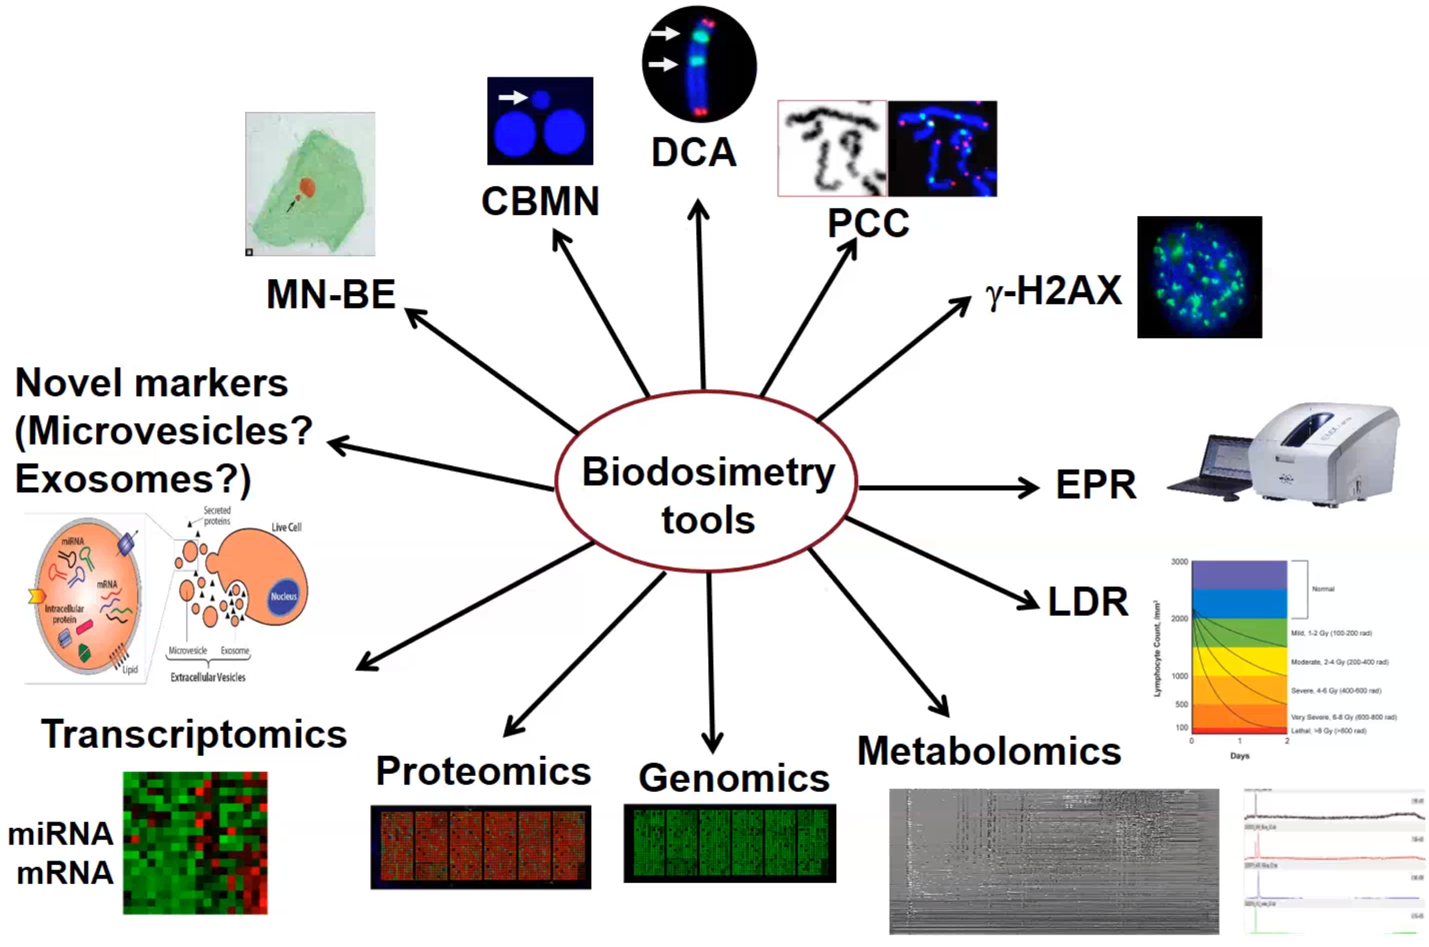 Biodosimetry techniques